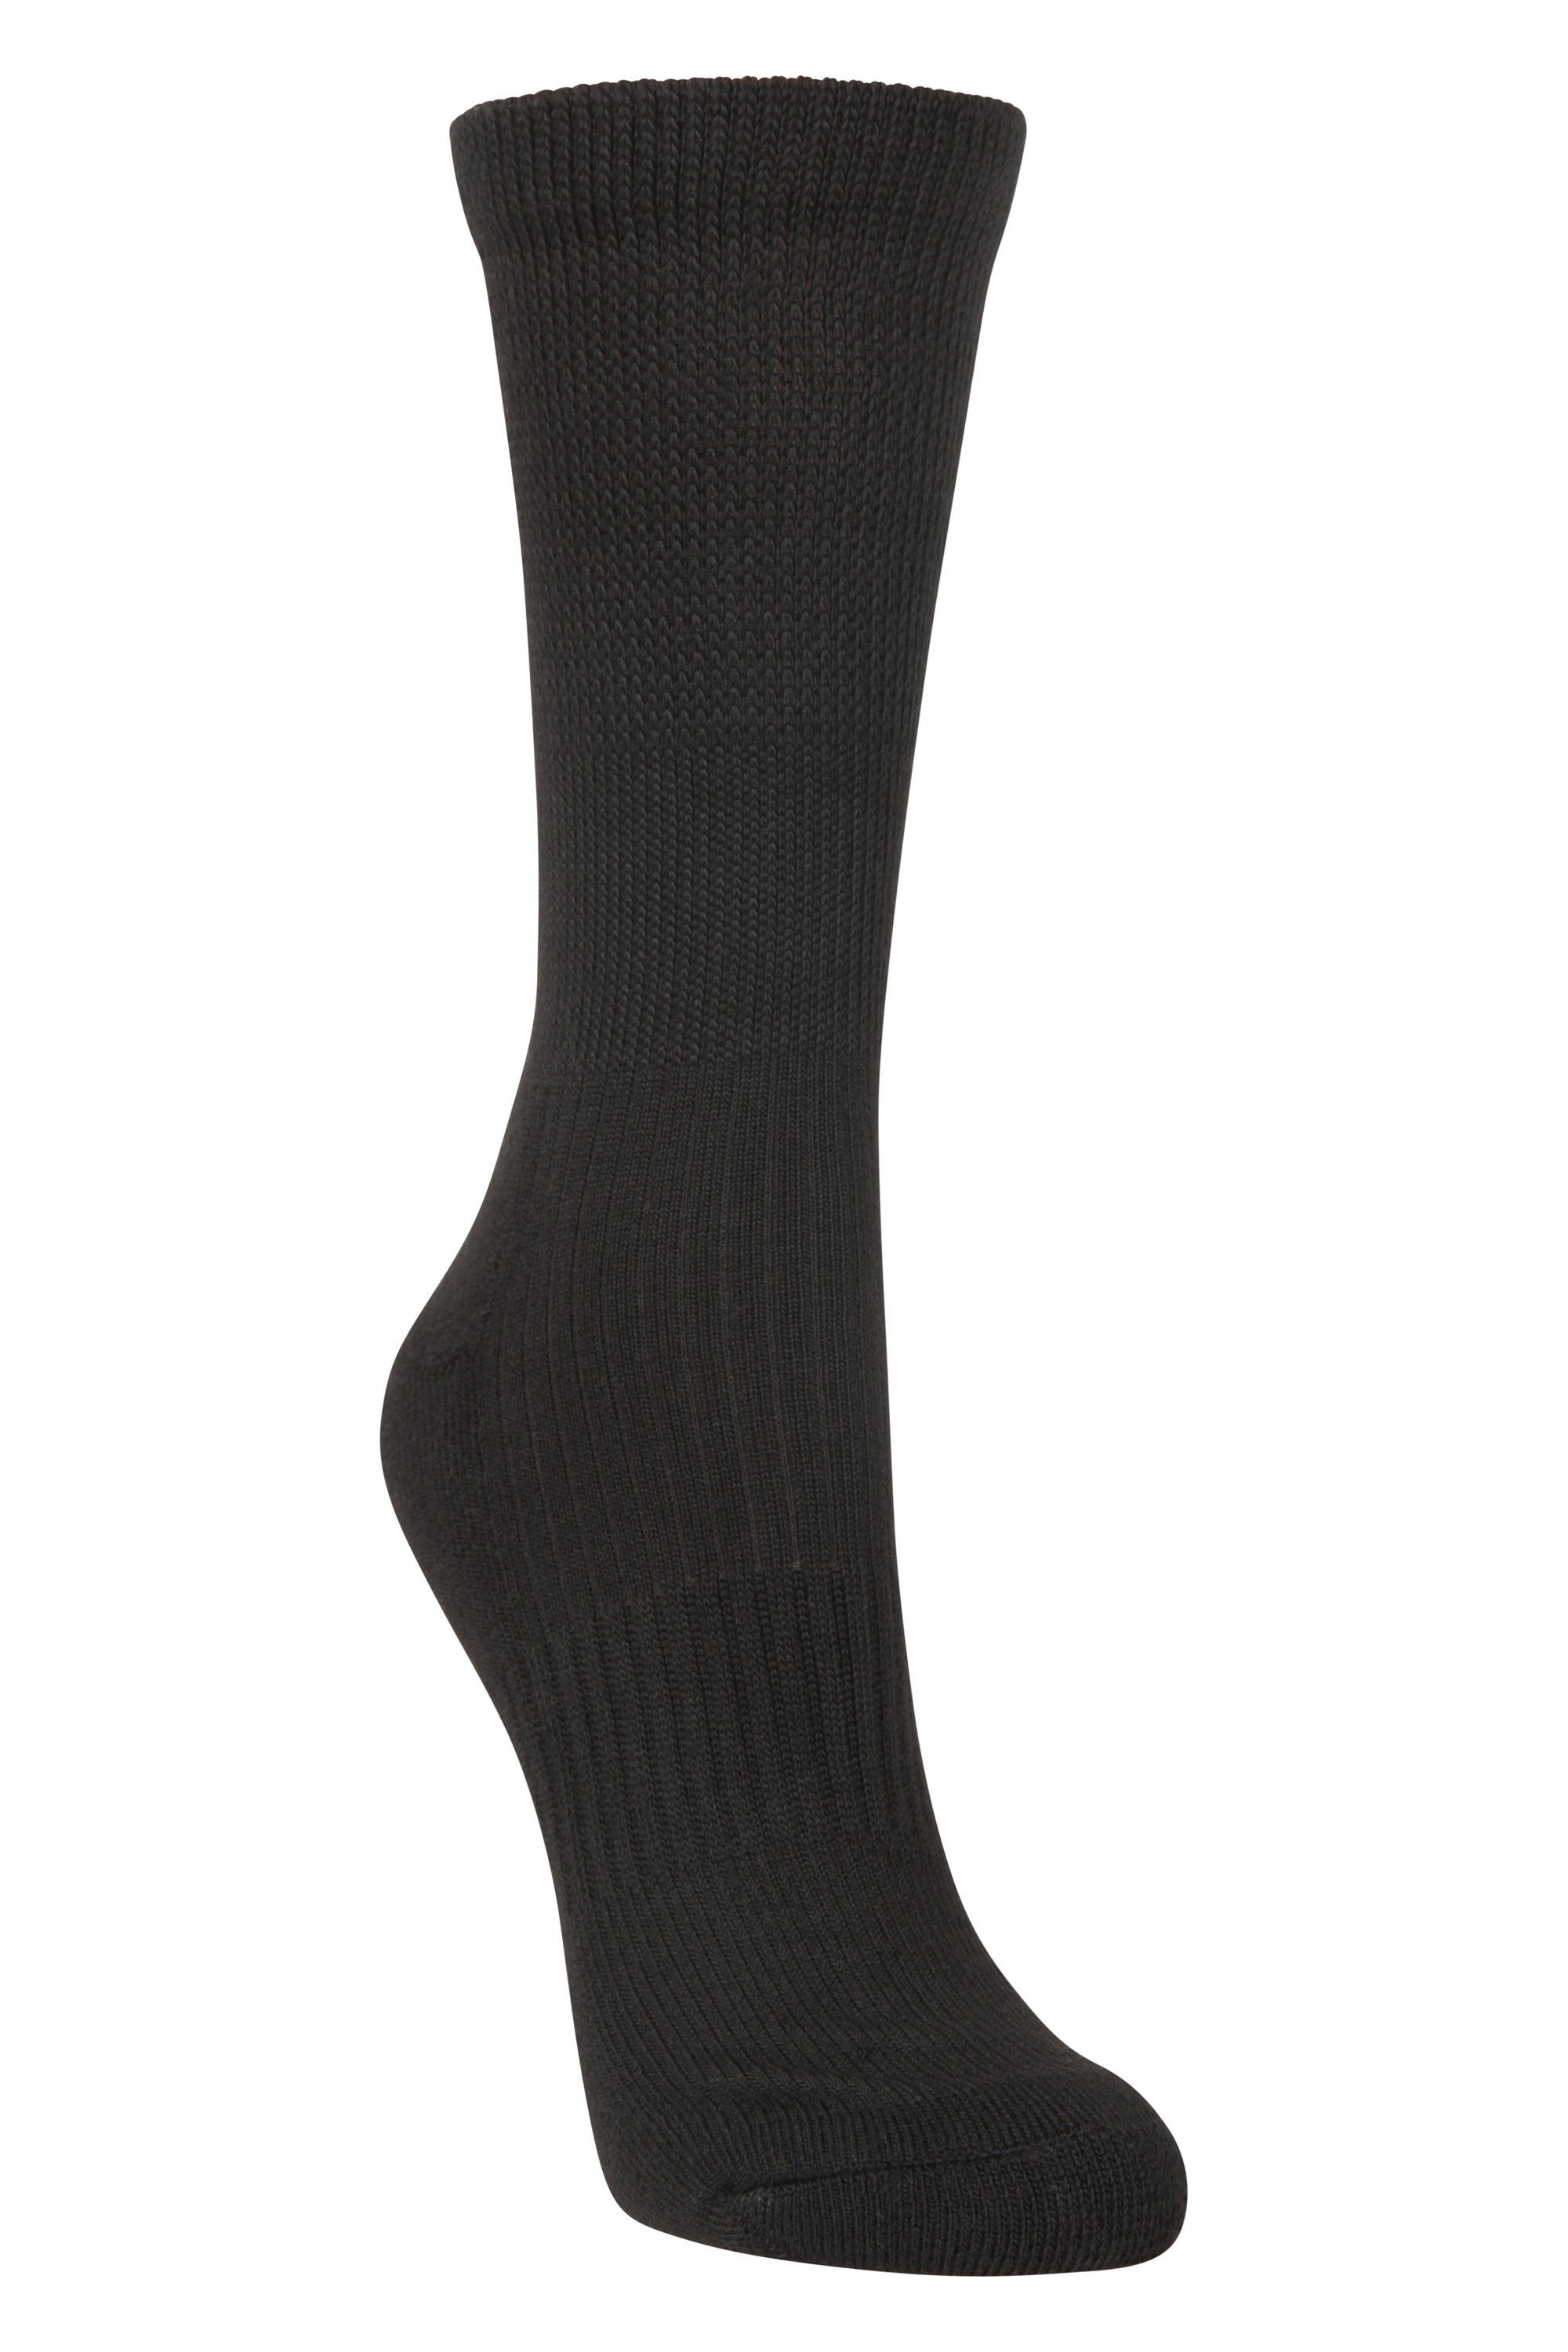 IsoCool Womens Mid-Calf Hiker Socks - Black